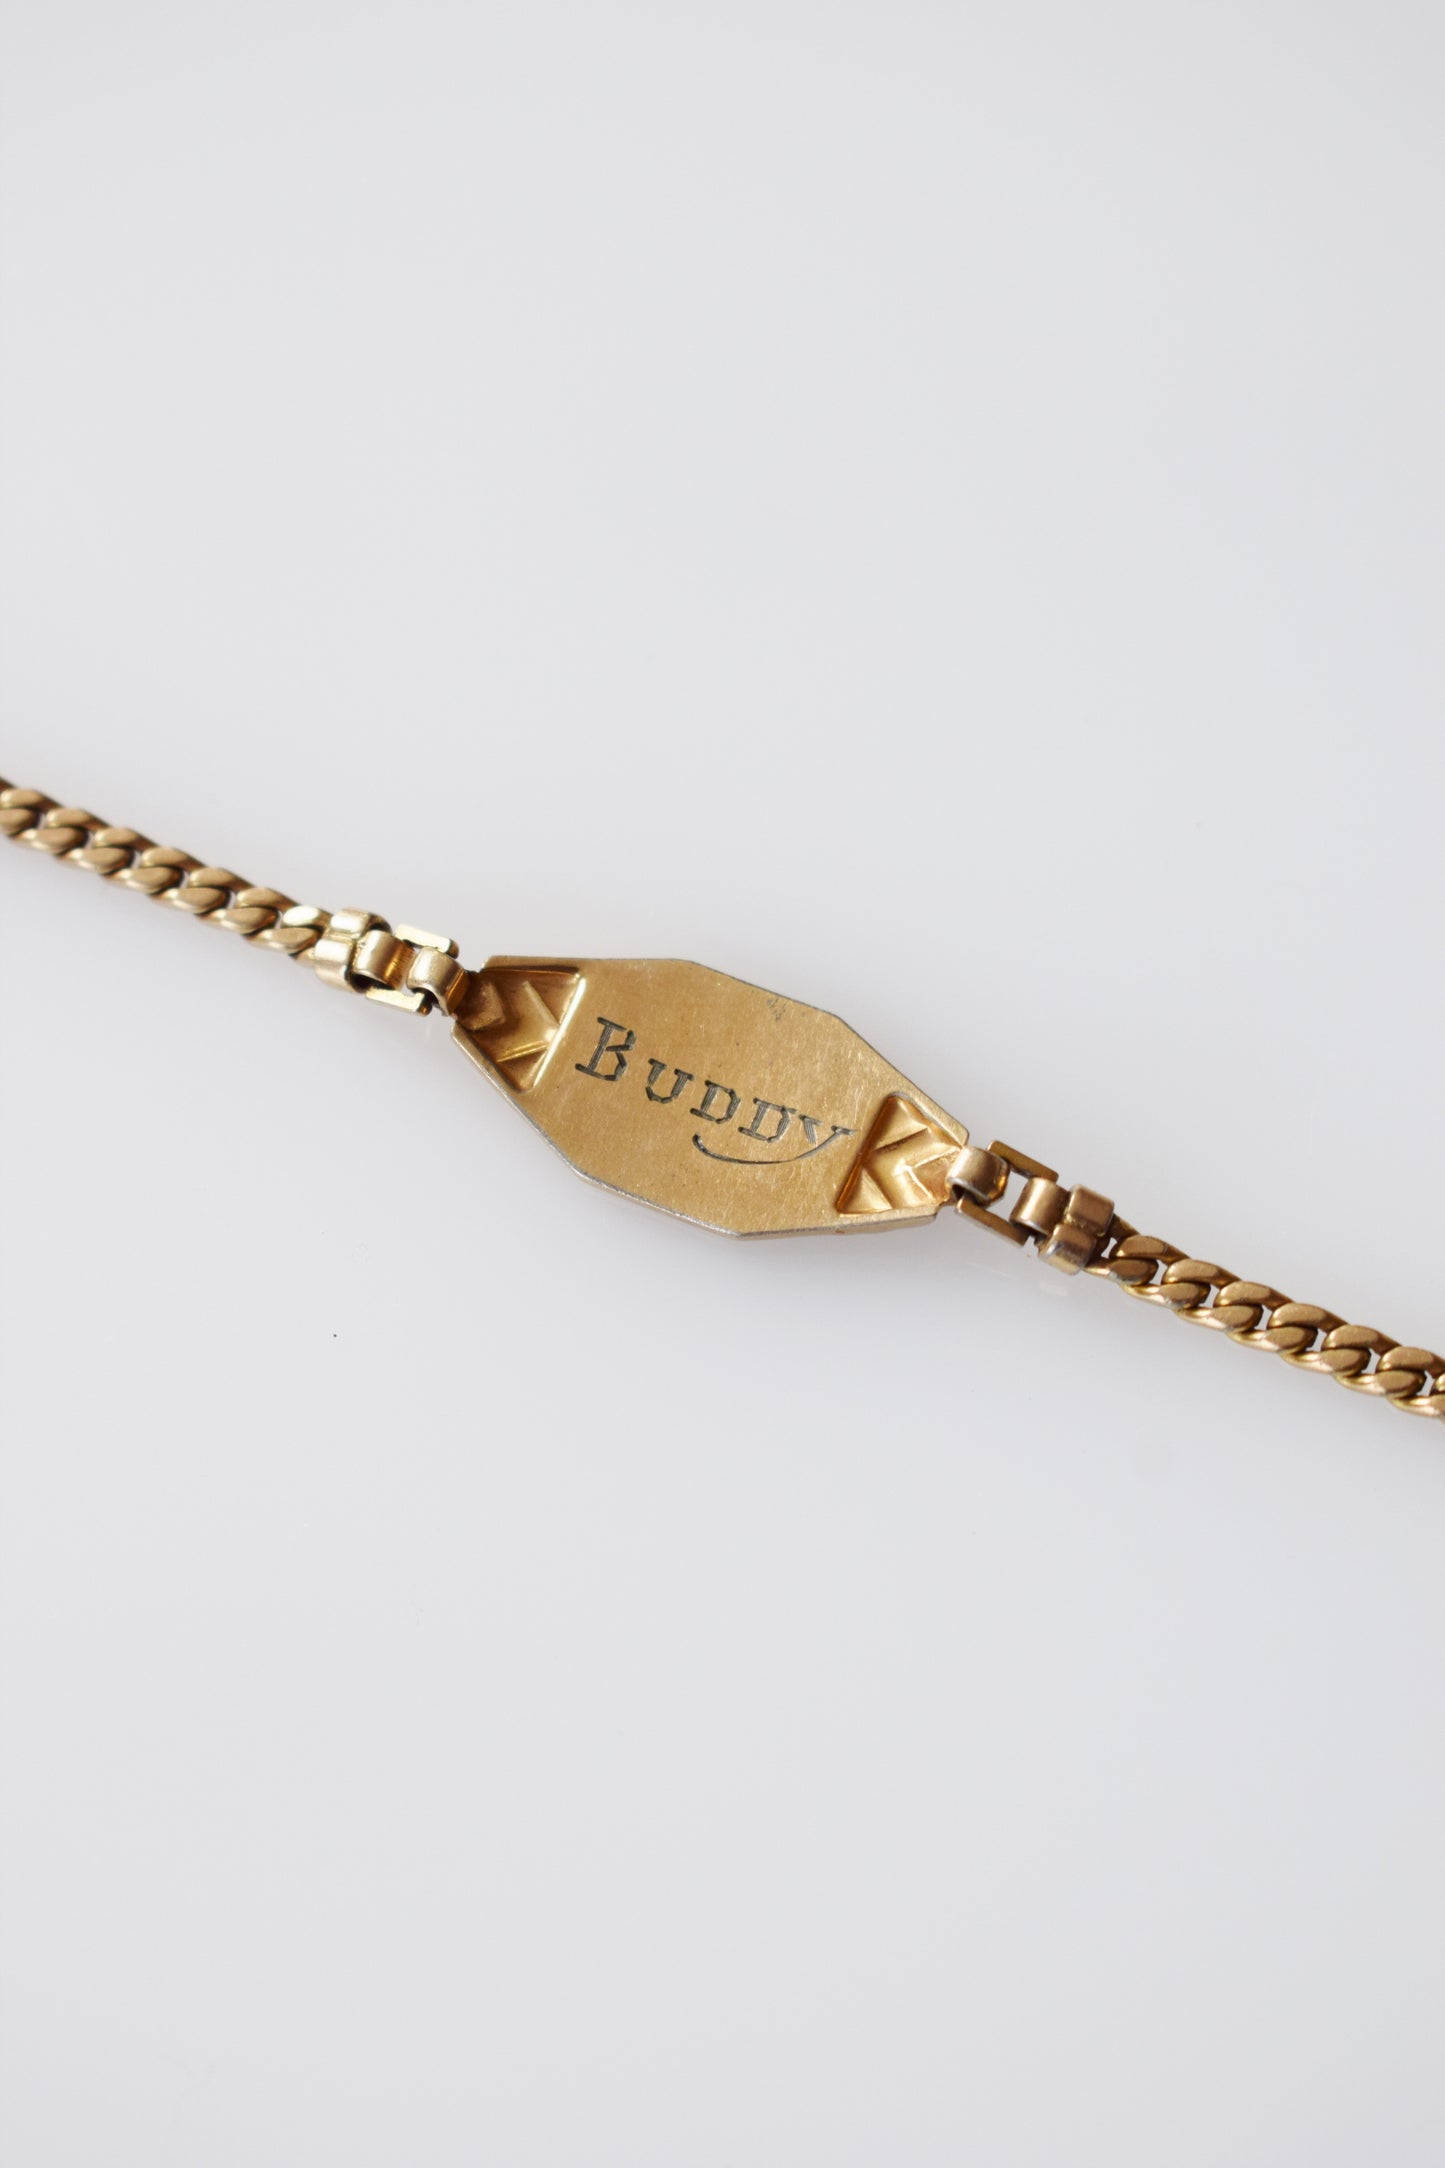 Vintage "Bunny"/"Buddy" Gold Name Tag Bracelet